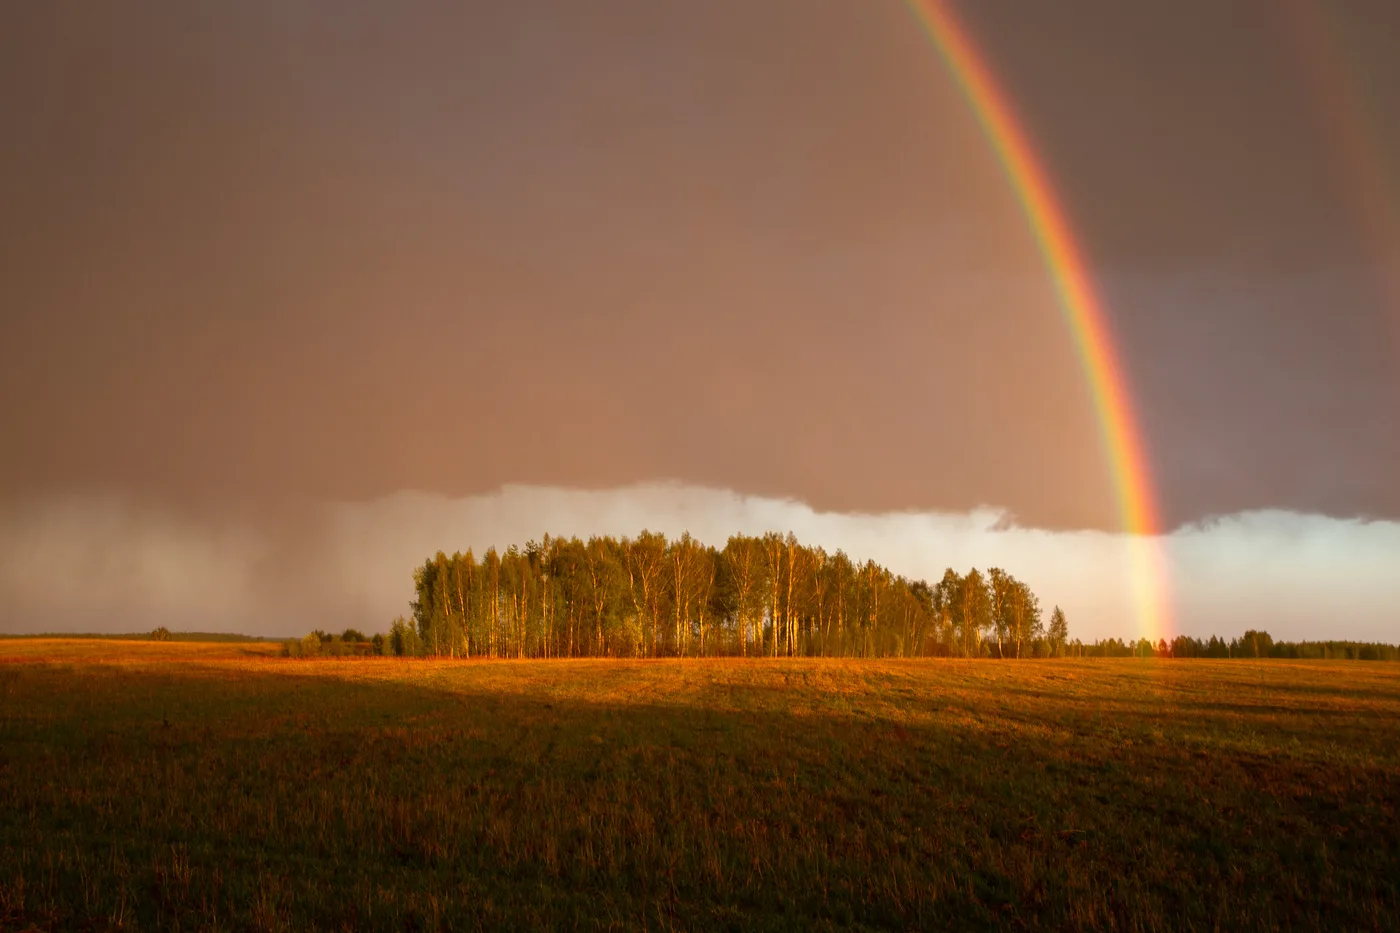 Rainbow - Rainbow, The photo